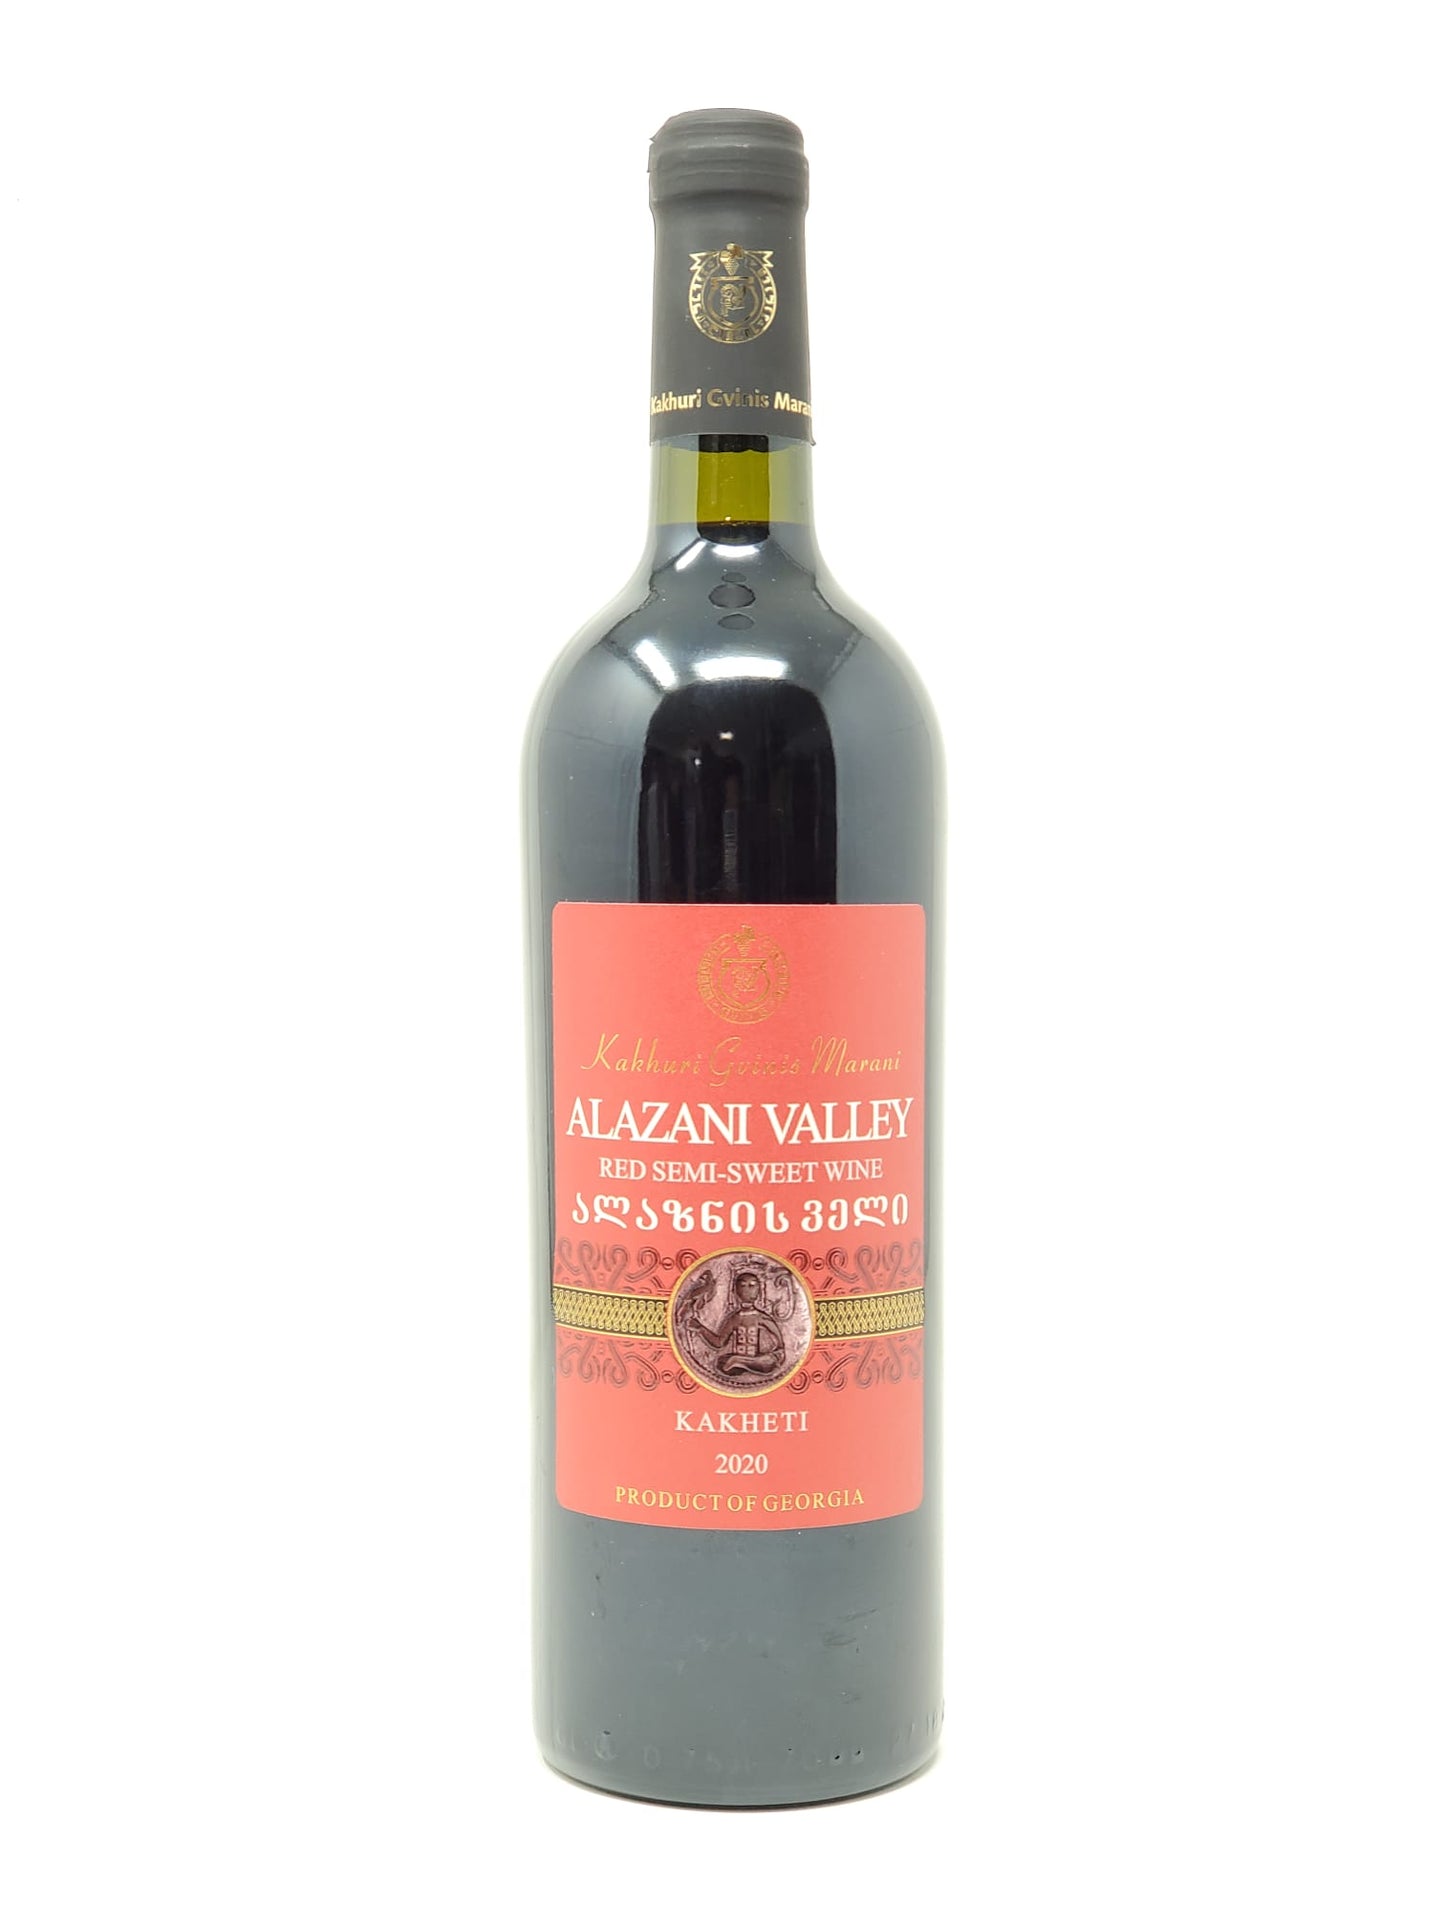 KGM GEORGIAN ALAZANI VALLEY RED SEMI-SWEET WINE 750ml